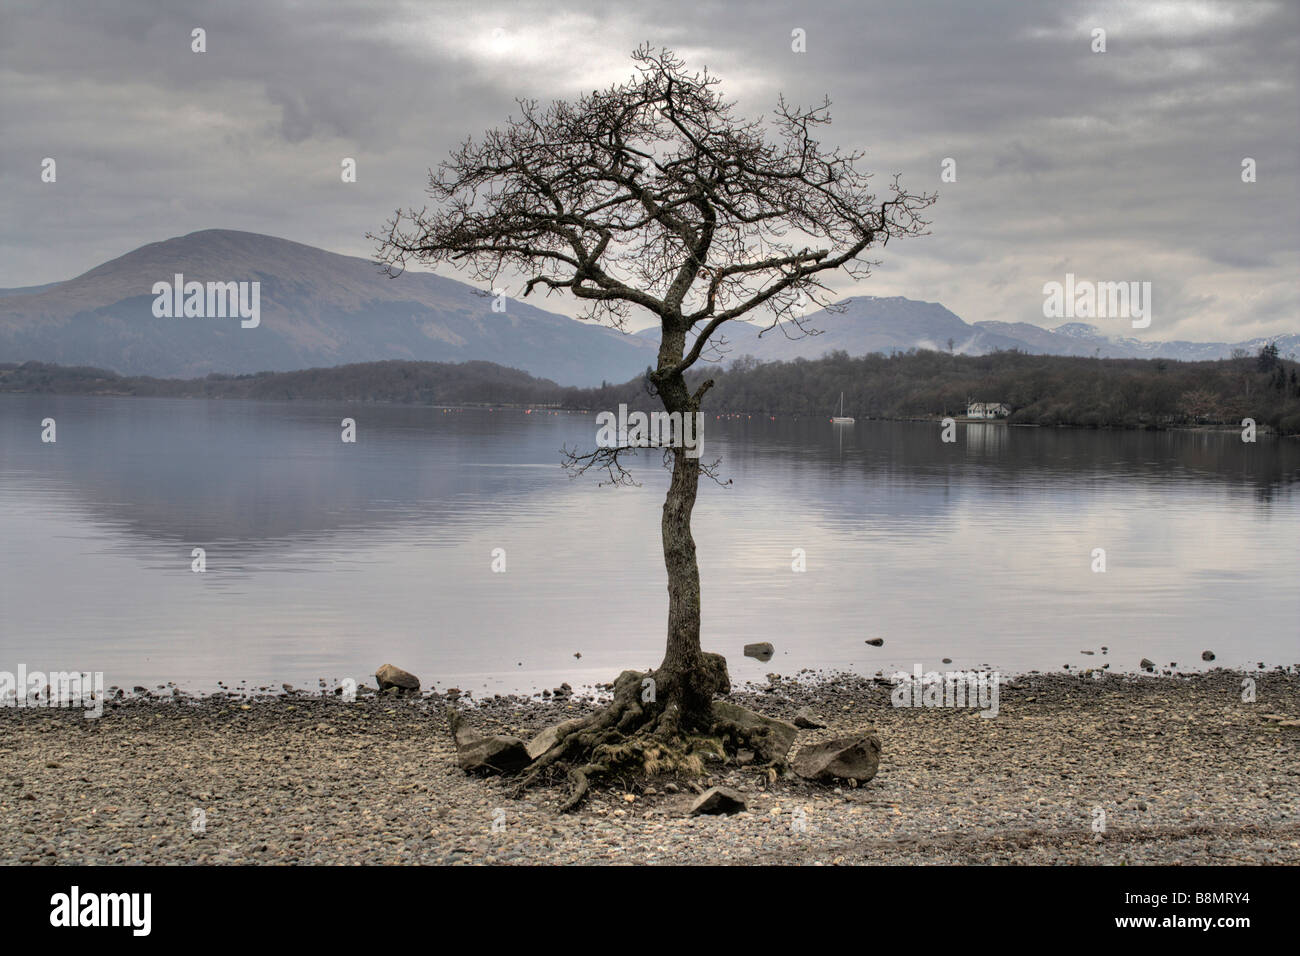 Solitary tree on the banks of Loch Lomond, Scotland Stock Photo